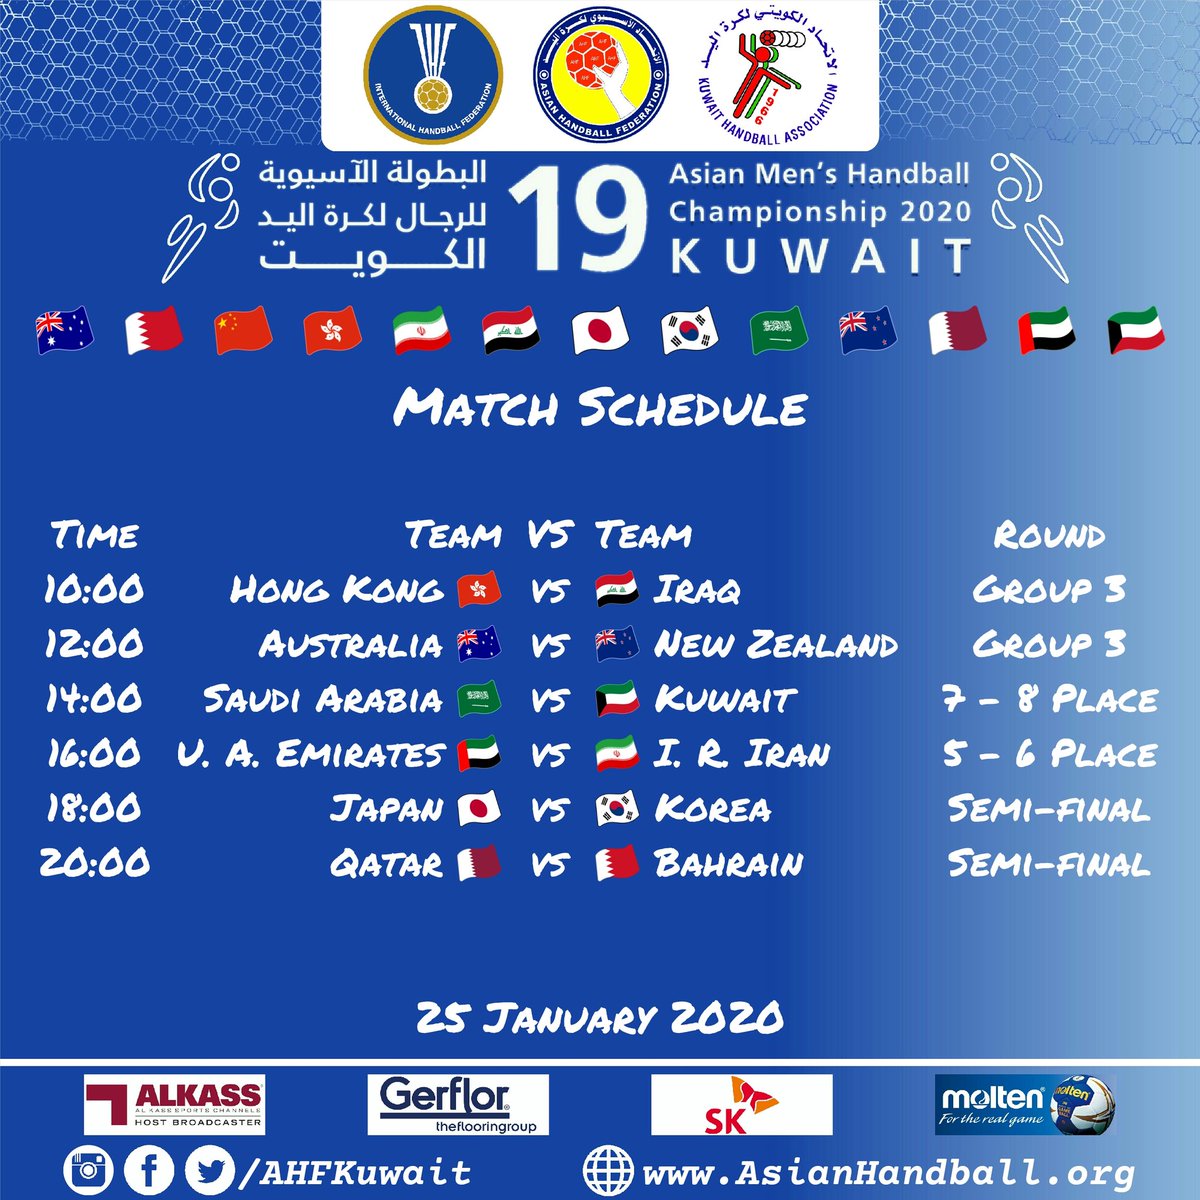 Match schedule | 25 January | 19th Asian Men's Handball Championship | Kuwait 2020 🇰🇼 #AsianHandball2020 #Kuwait2020 #AHFKuwait